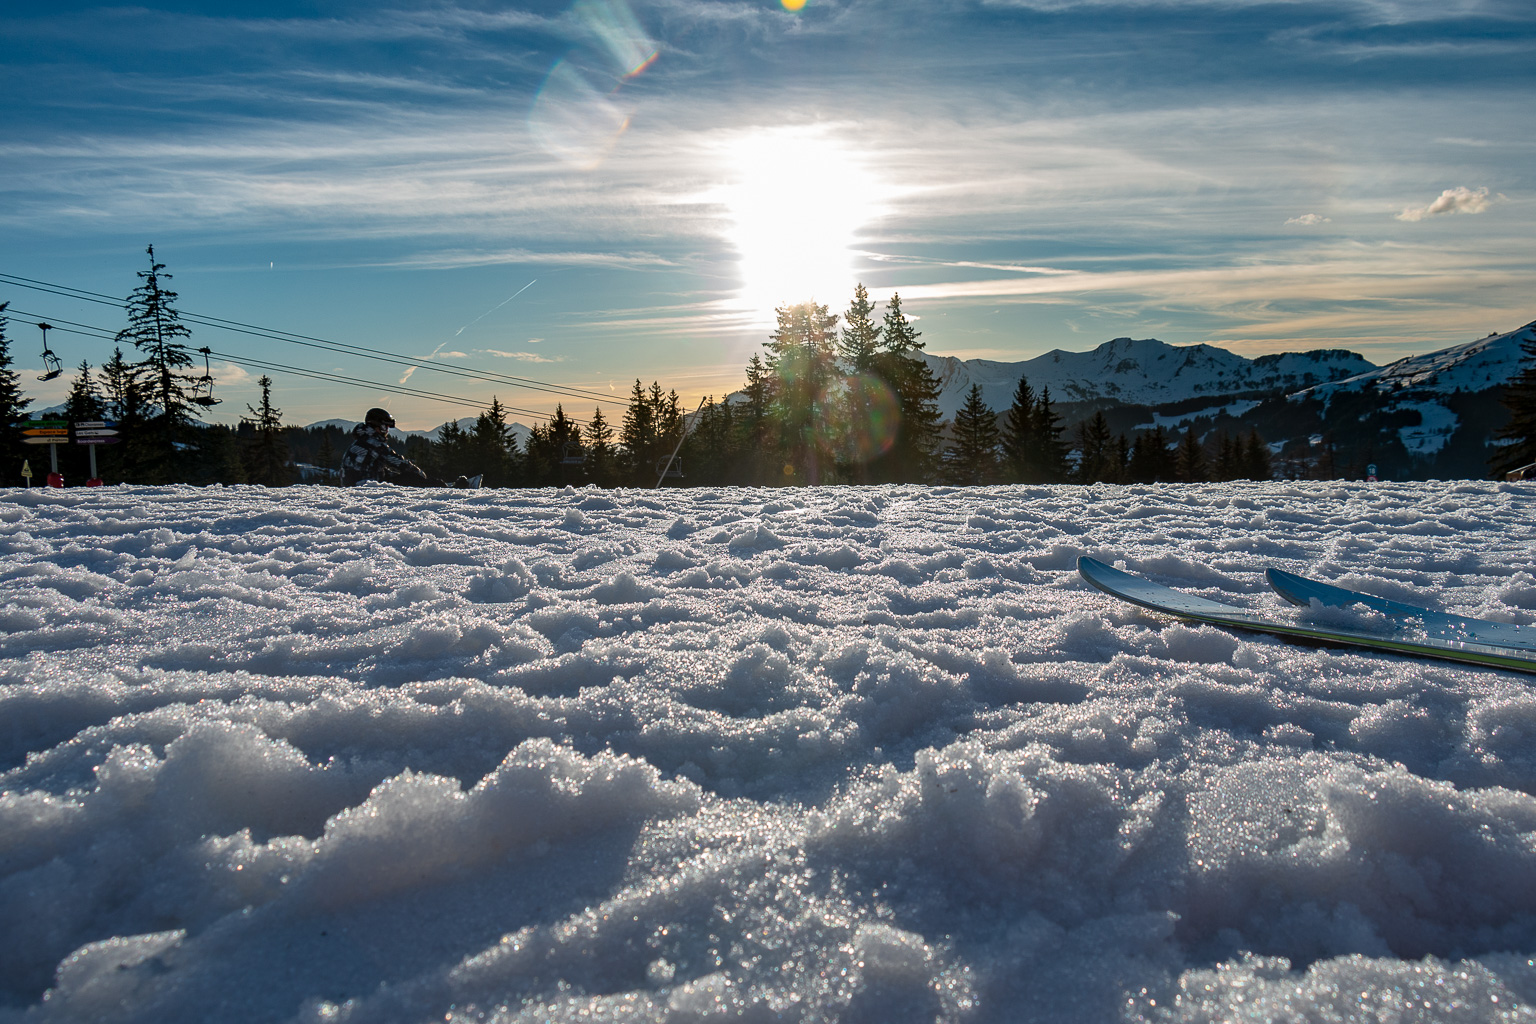 Abendsonne vor dem Yeti, Talabfahrt  Les Gets Département Haute-Savoie Frankreich by Peter Ehlert in Ski_LesGets